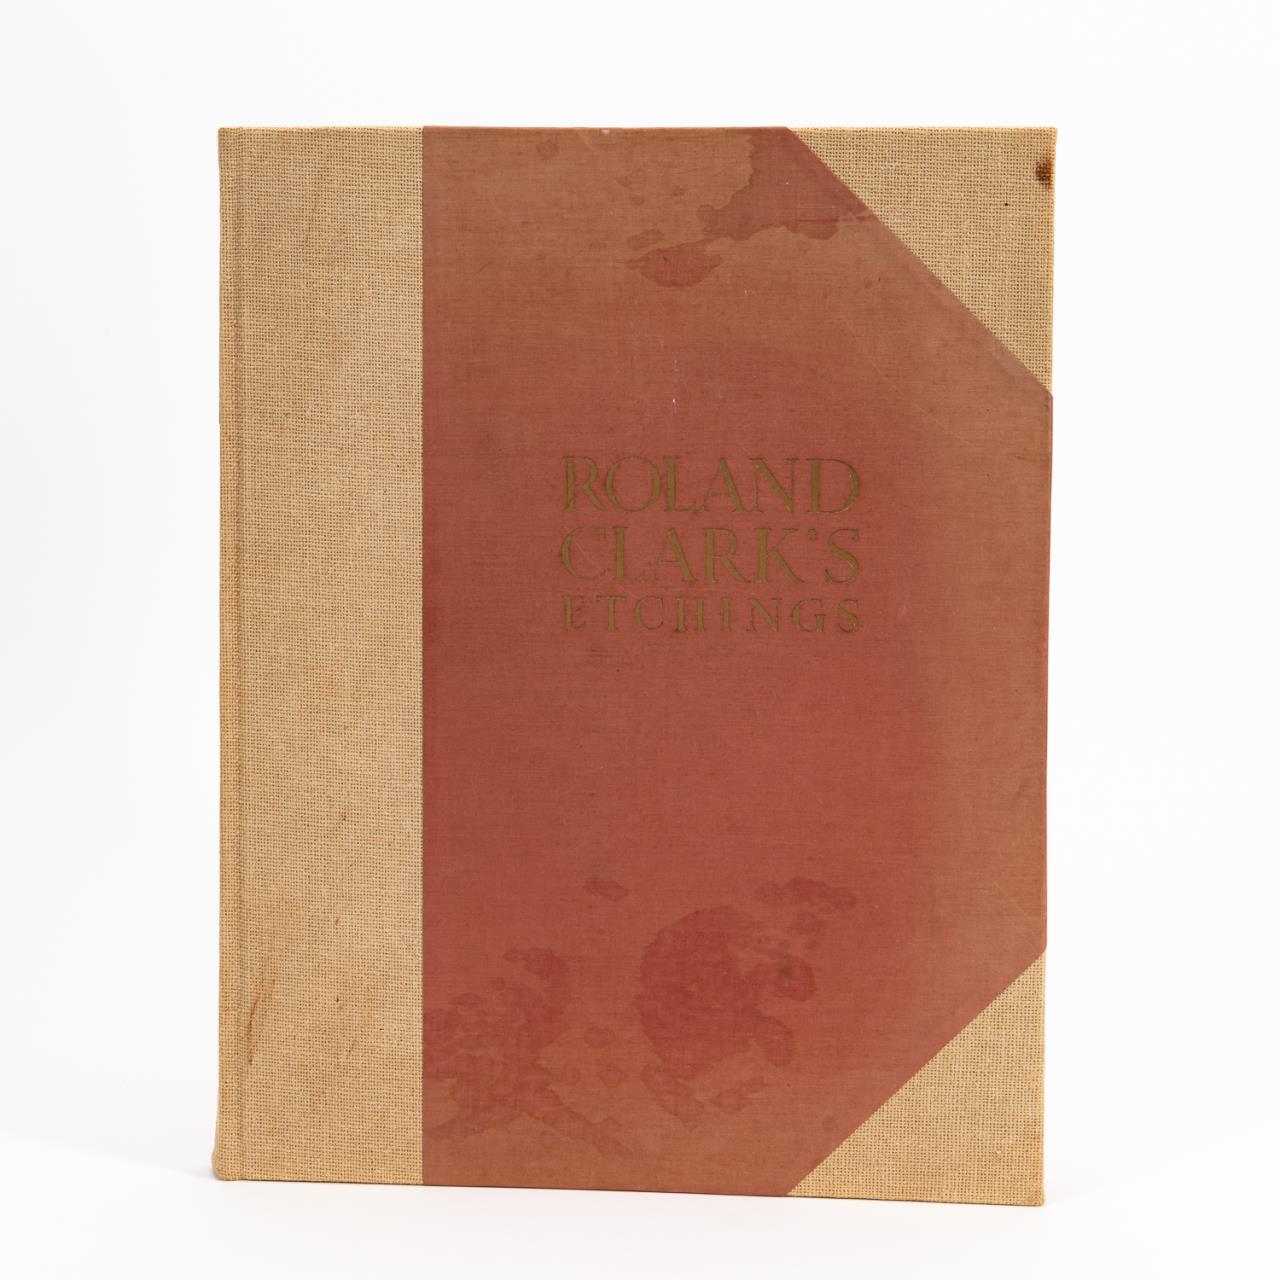  ROLAND CLARK S ETCHINGS DERRYDALE 359c65